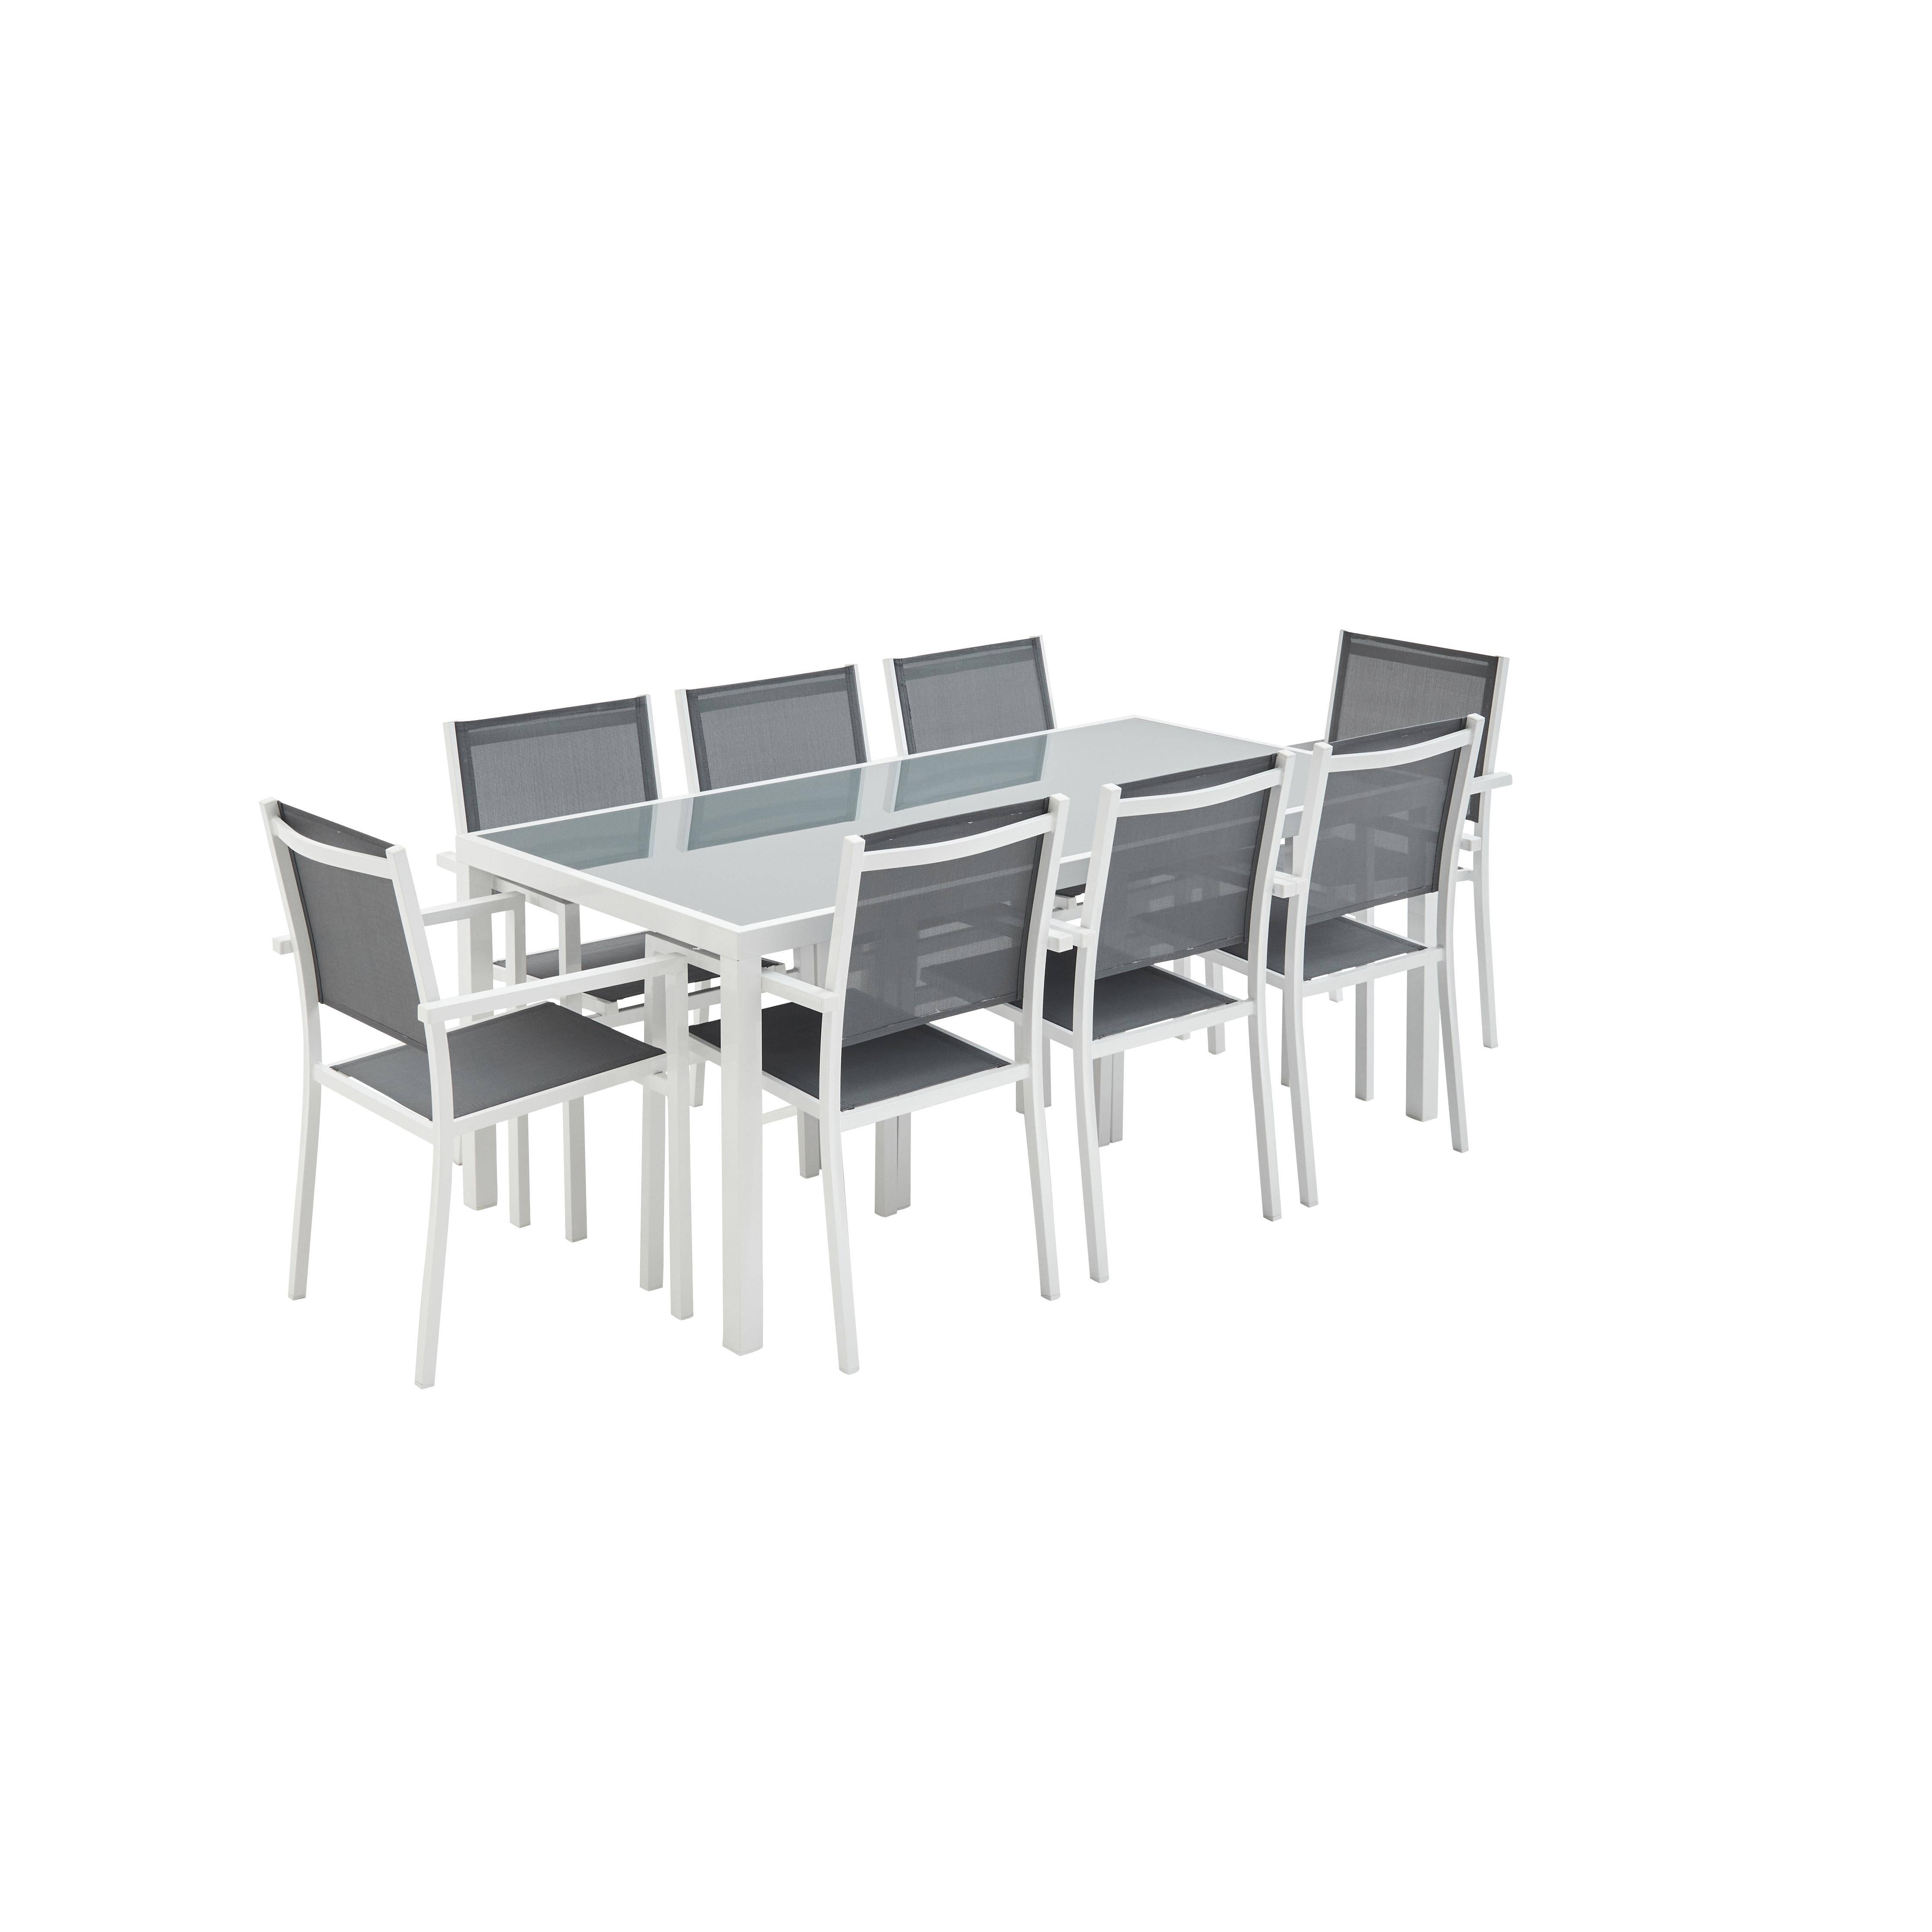 Gartengarnitur aus Aluminium und Textilene - Capua 180 cm - Weiß, Grau - 8 Plätze - 1 großer rechteckiger Tisch, 8 stapelbare Sessel Photo2